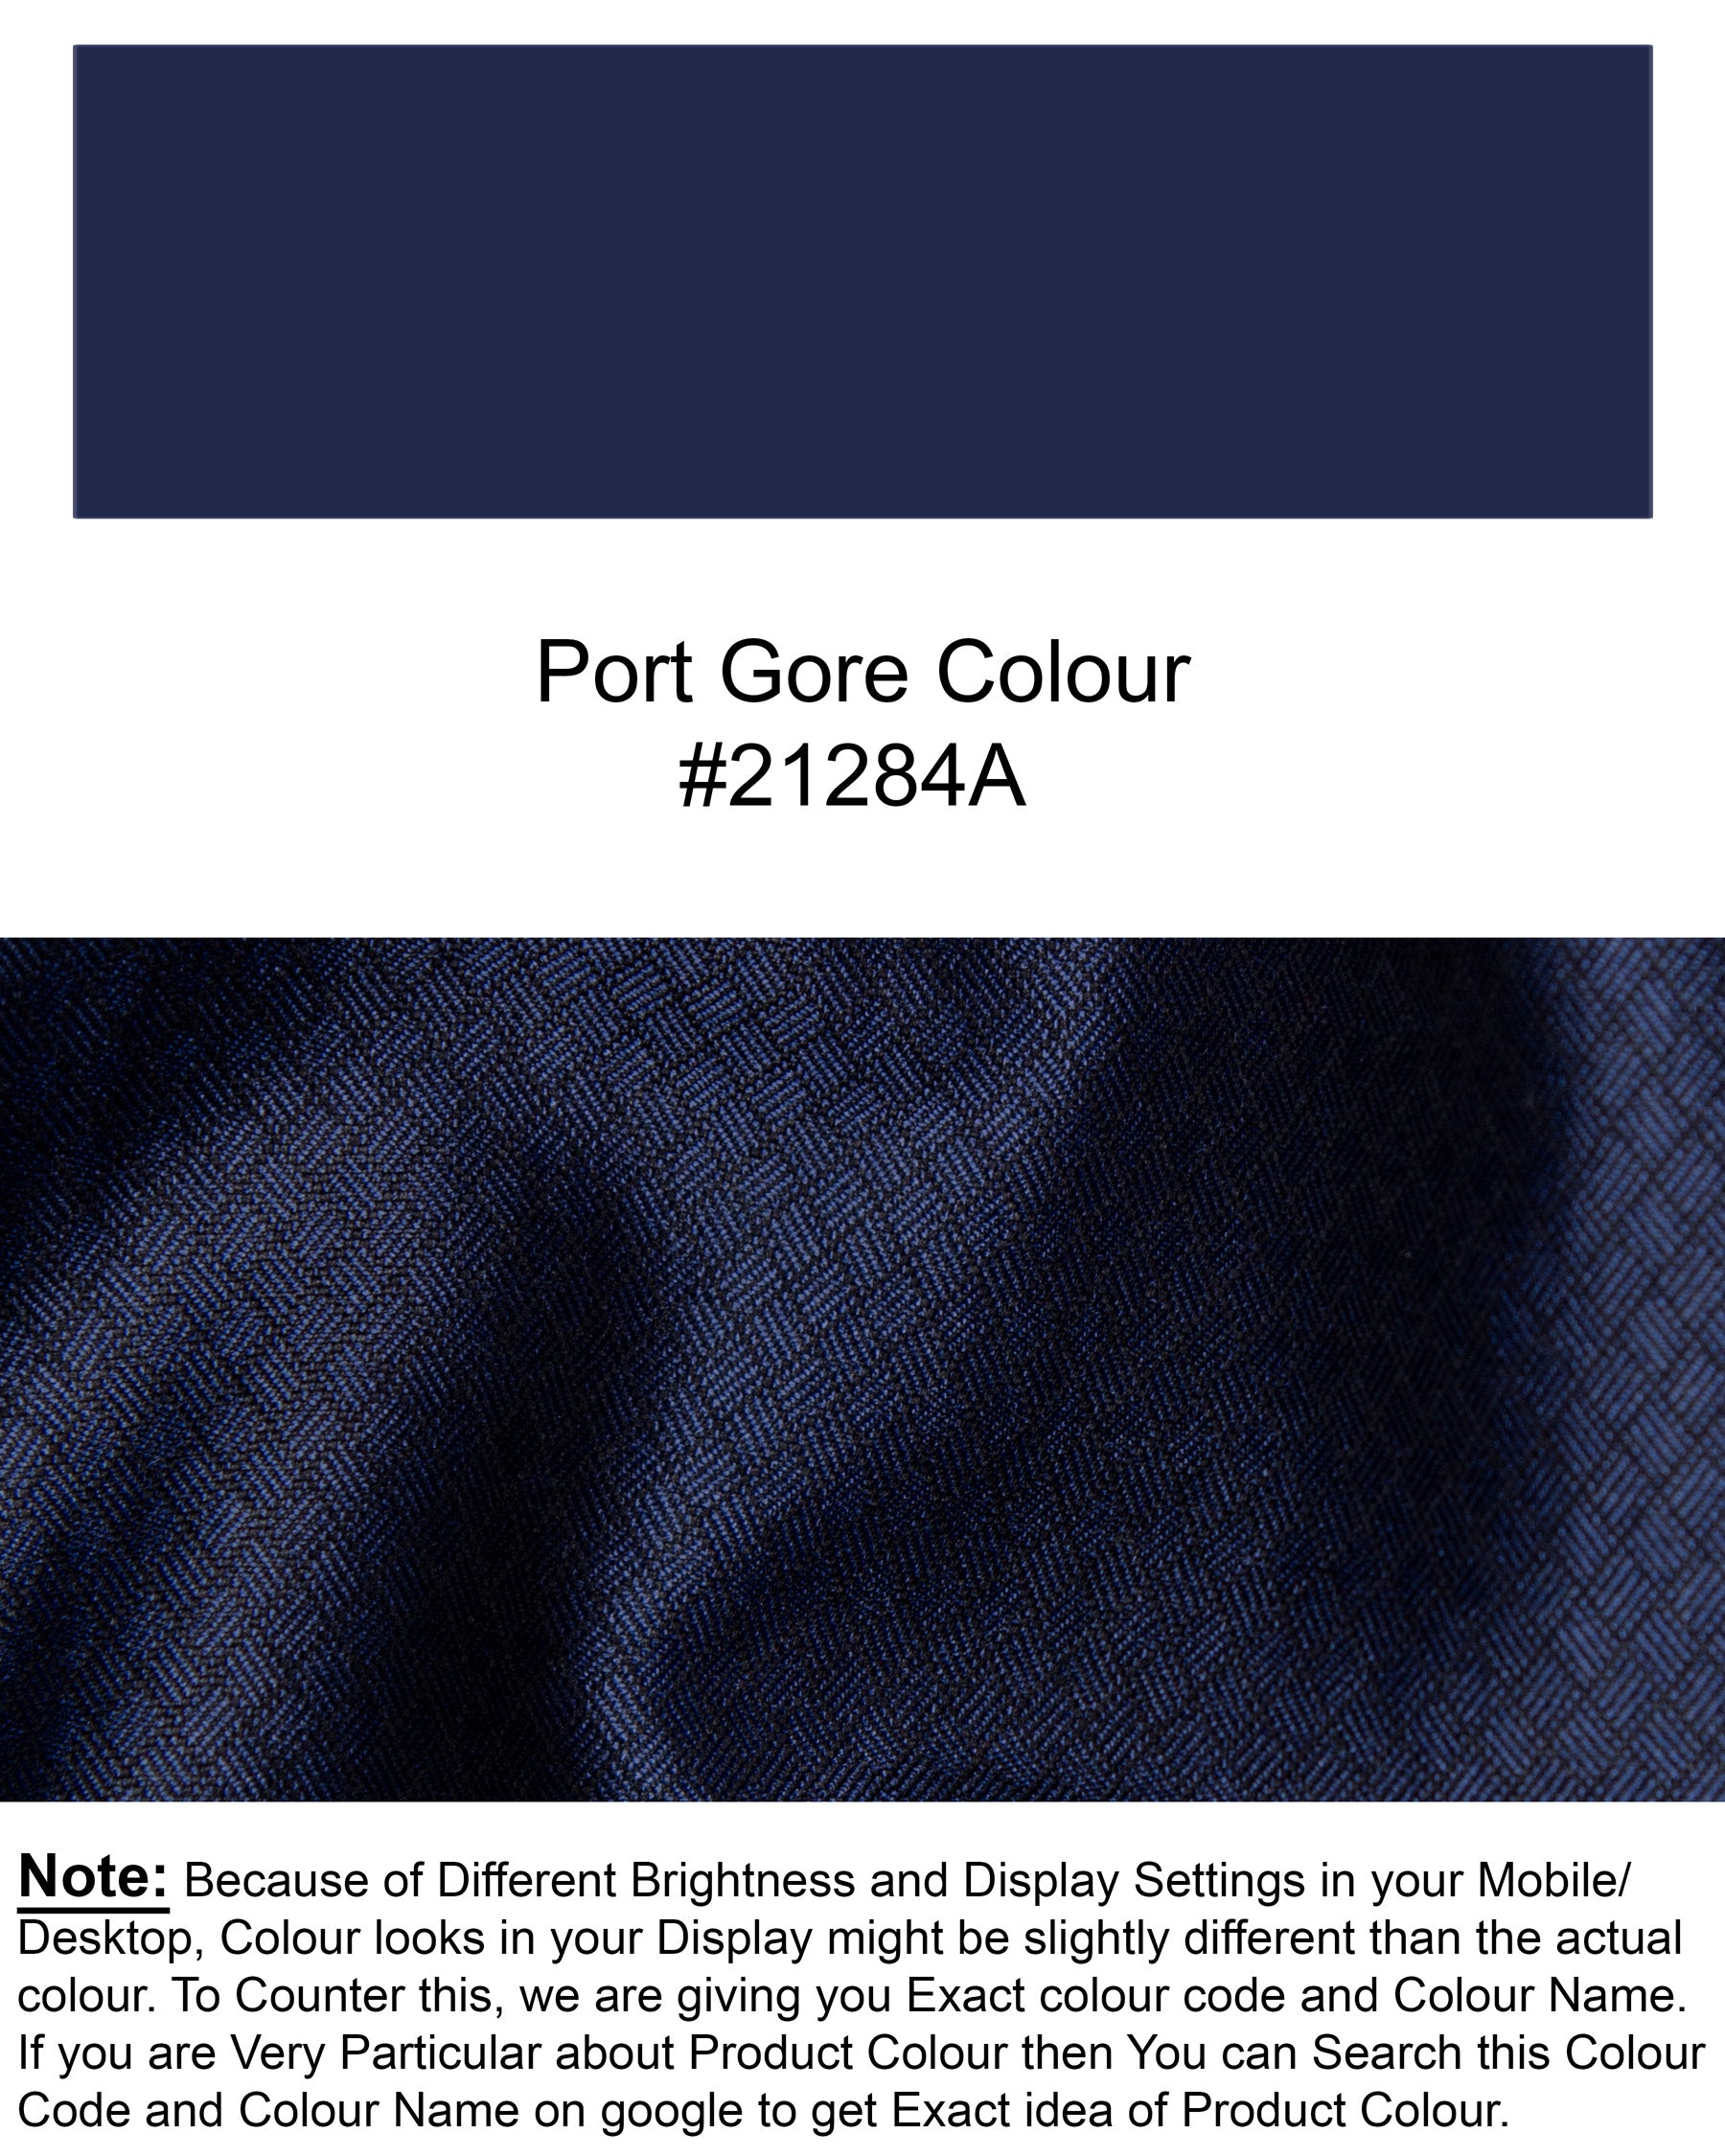 Port Gore Blue Subtle Textured Woolrich Tuxedo Blazer BL1273-BKL-48, BL1273-BKL-56, BL1273-BKL-36, BL1273-BKL-38, BL1273-BKL-40, BL1273-BKL-42, BL1273-BKL-44, BL1273-BKL-46, BL1273-BKL-50, BL1273-BKL-52, BL1273-BKL-54, BL1273-BKL-58, BL1273-BKL-60